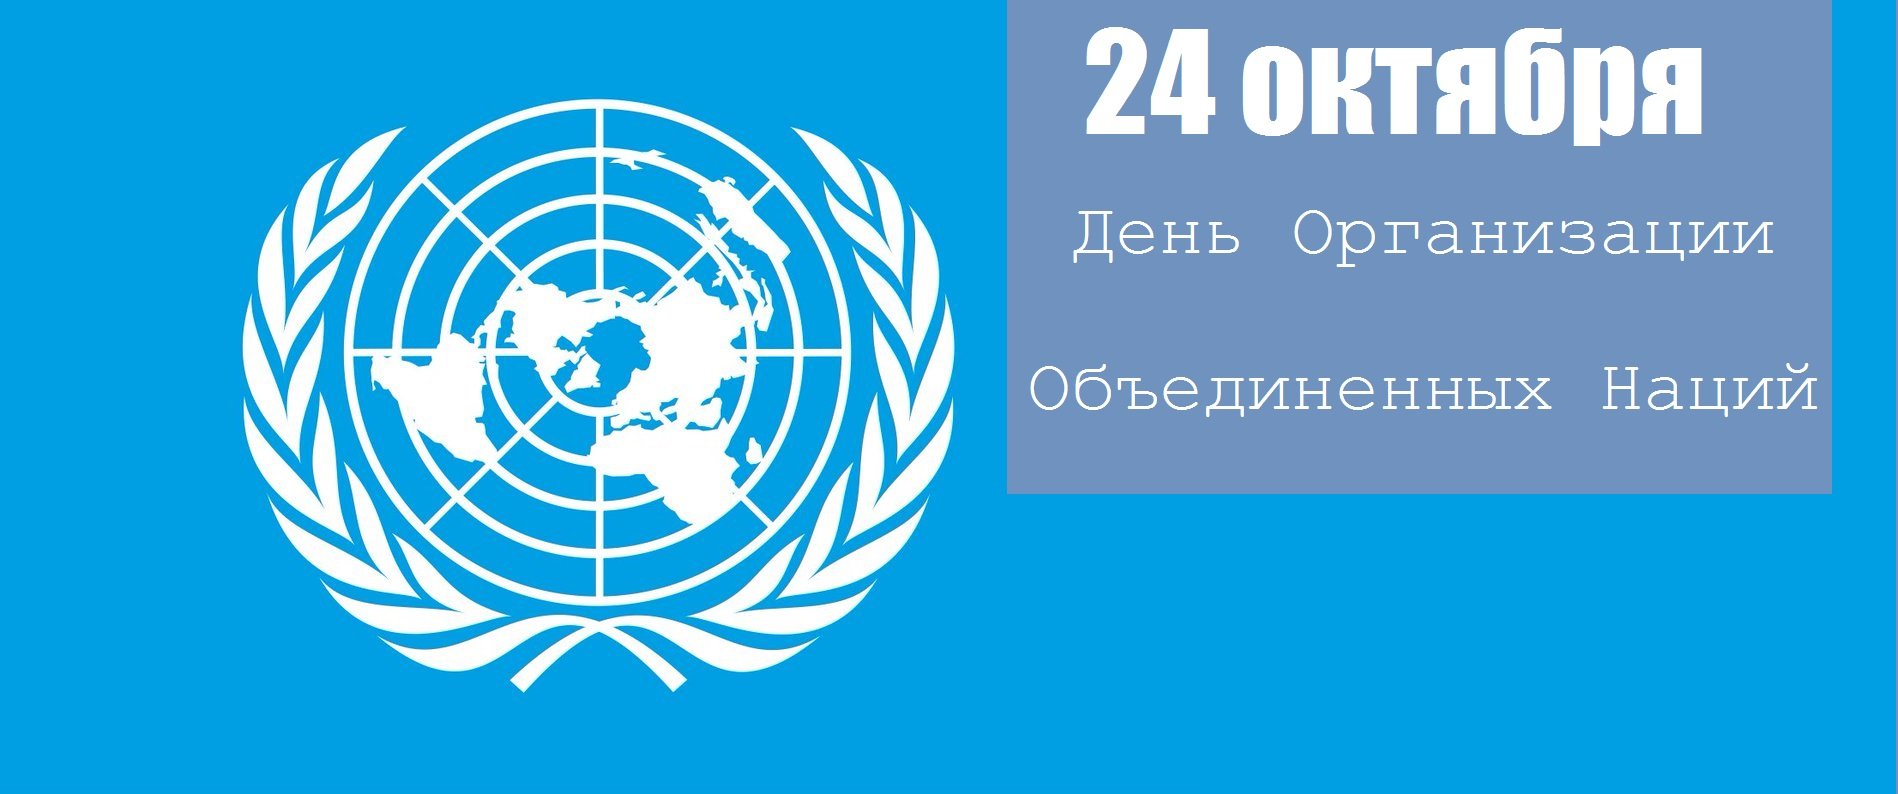 Праздник день оон. United Nations Organization.